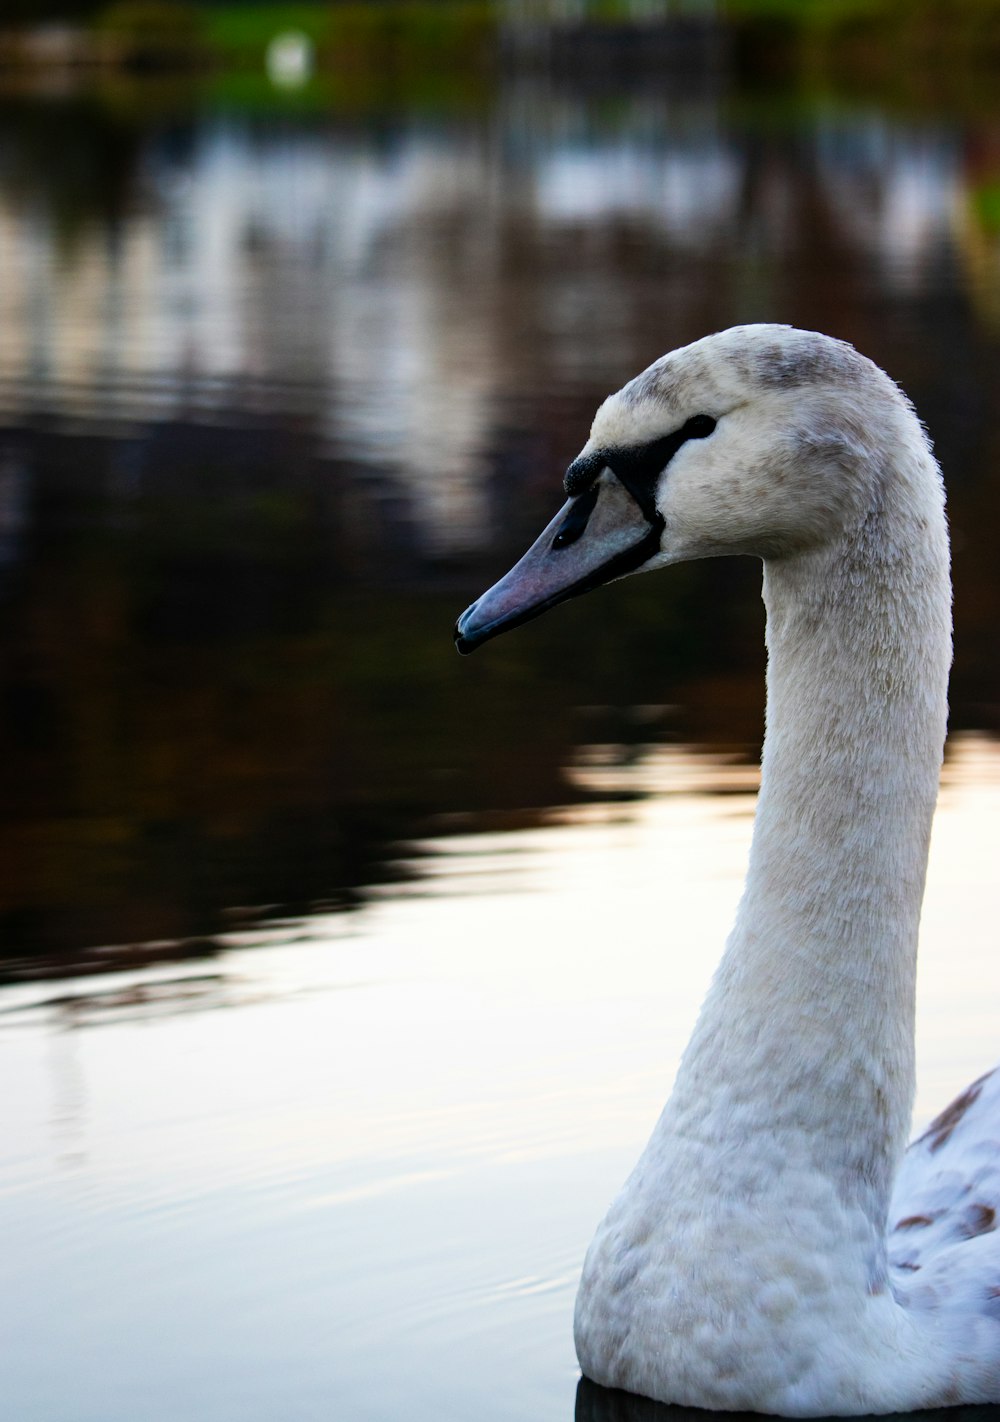 white swan in water during daytime